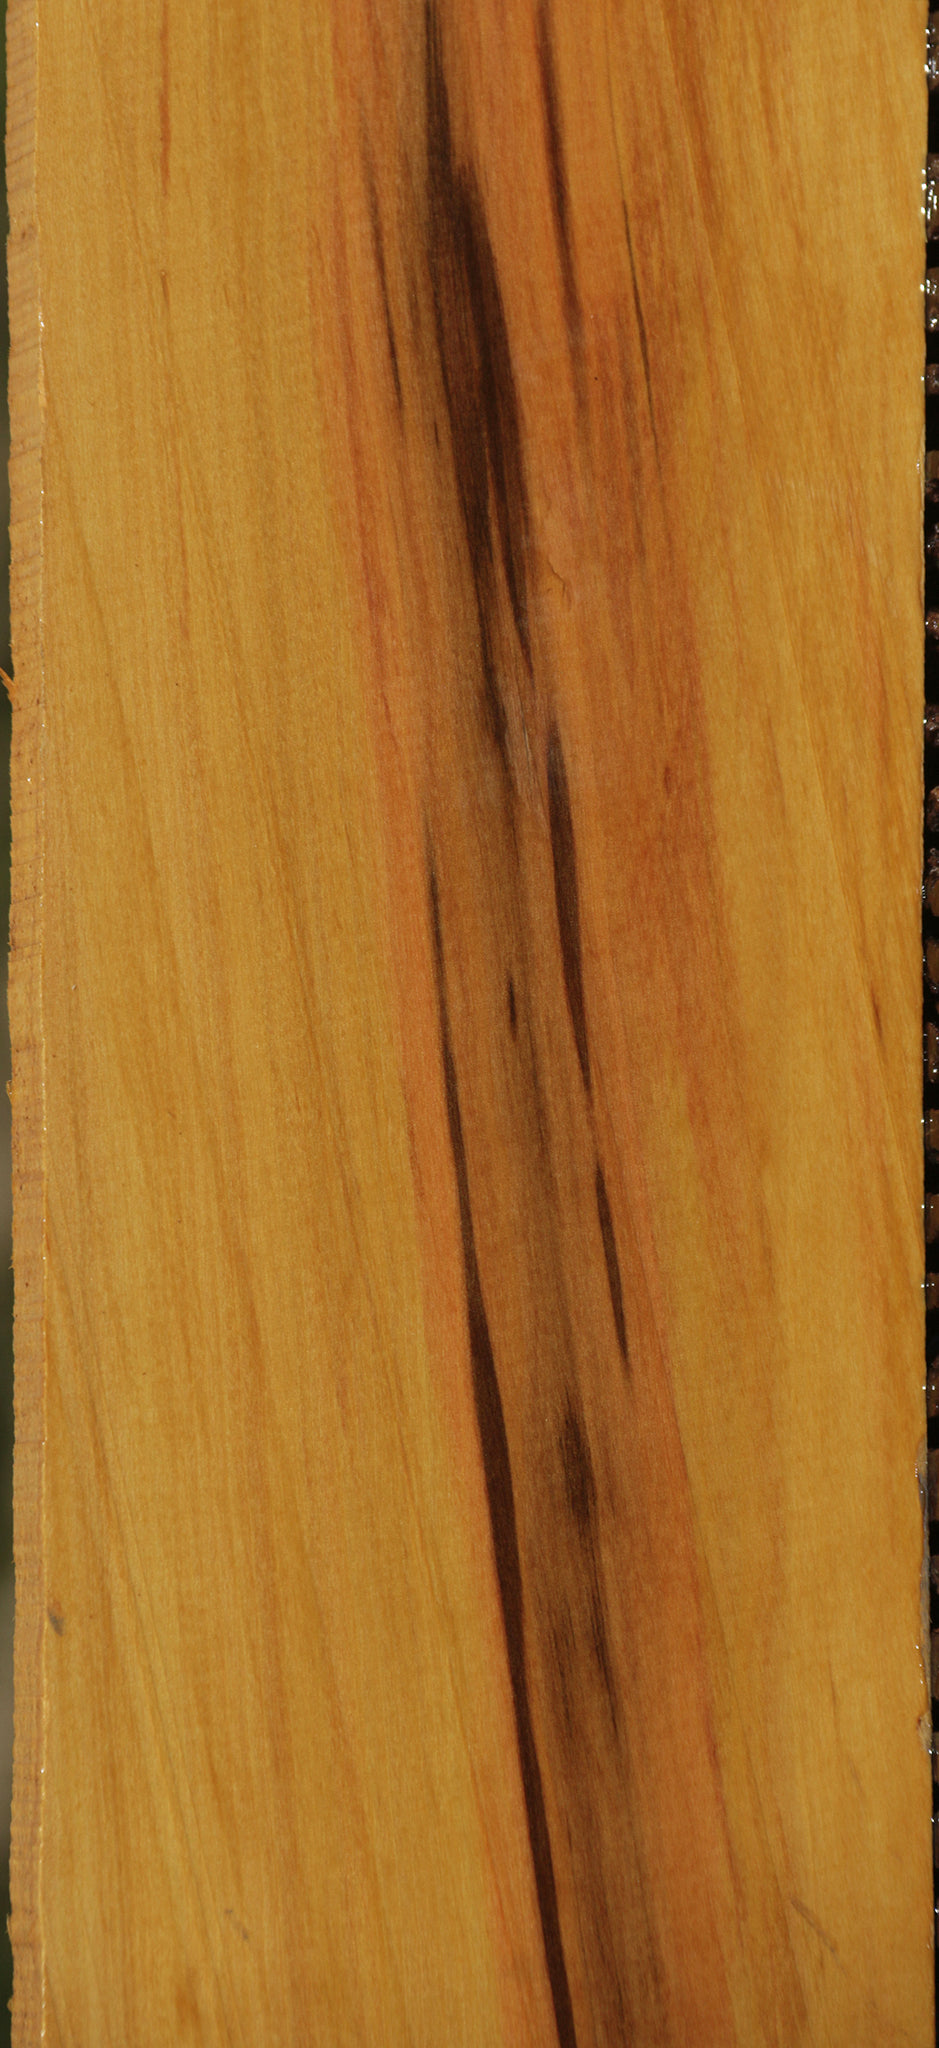 Kirandy Lumber